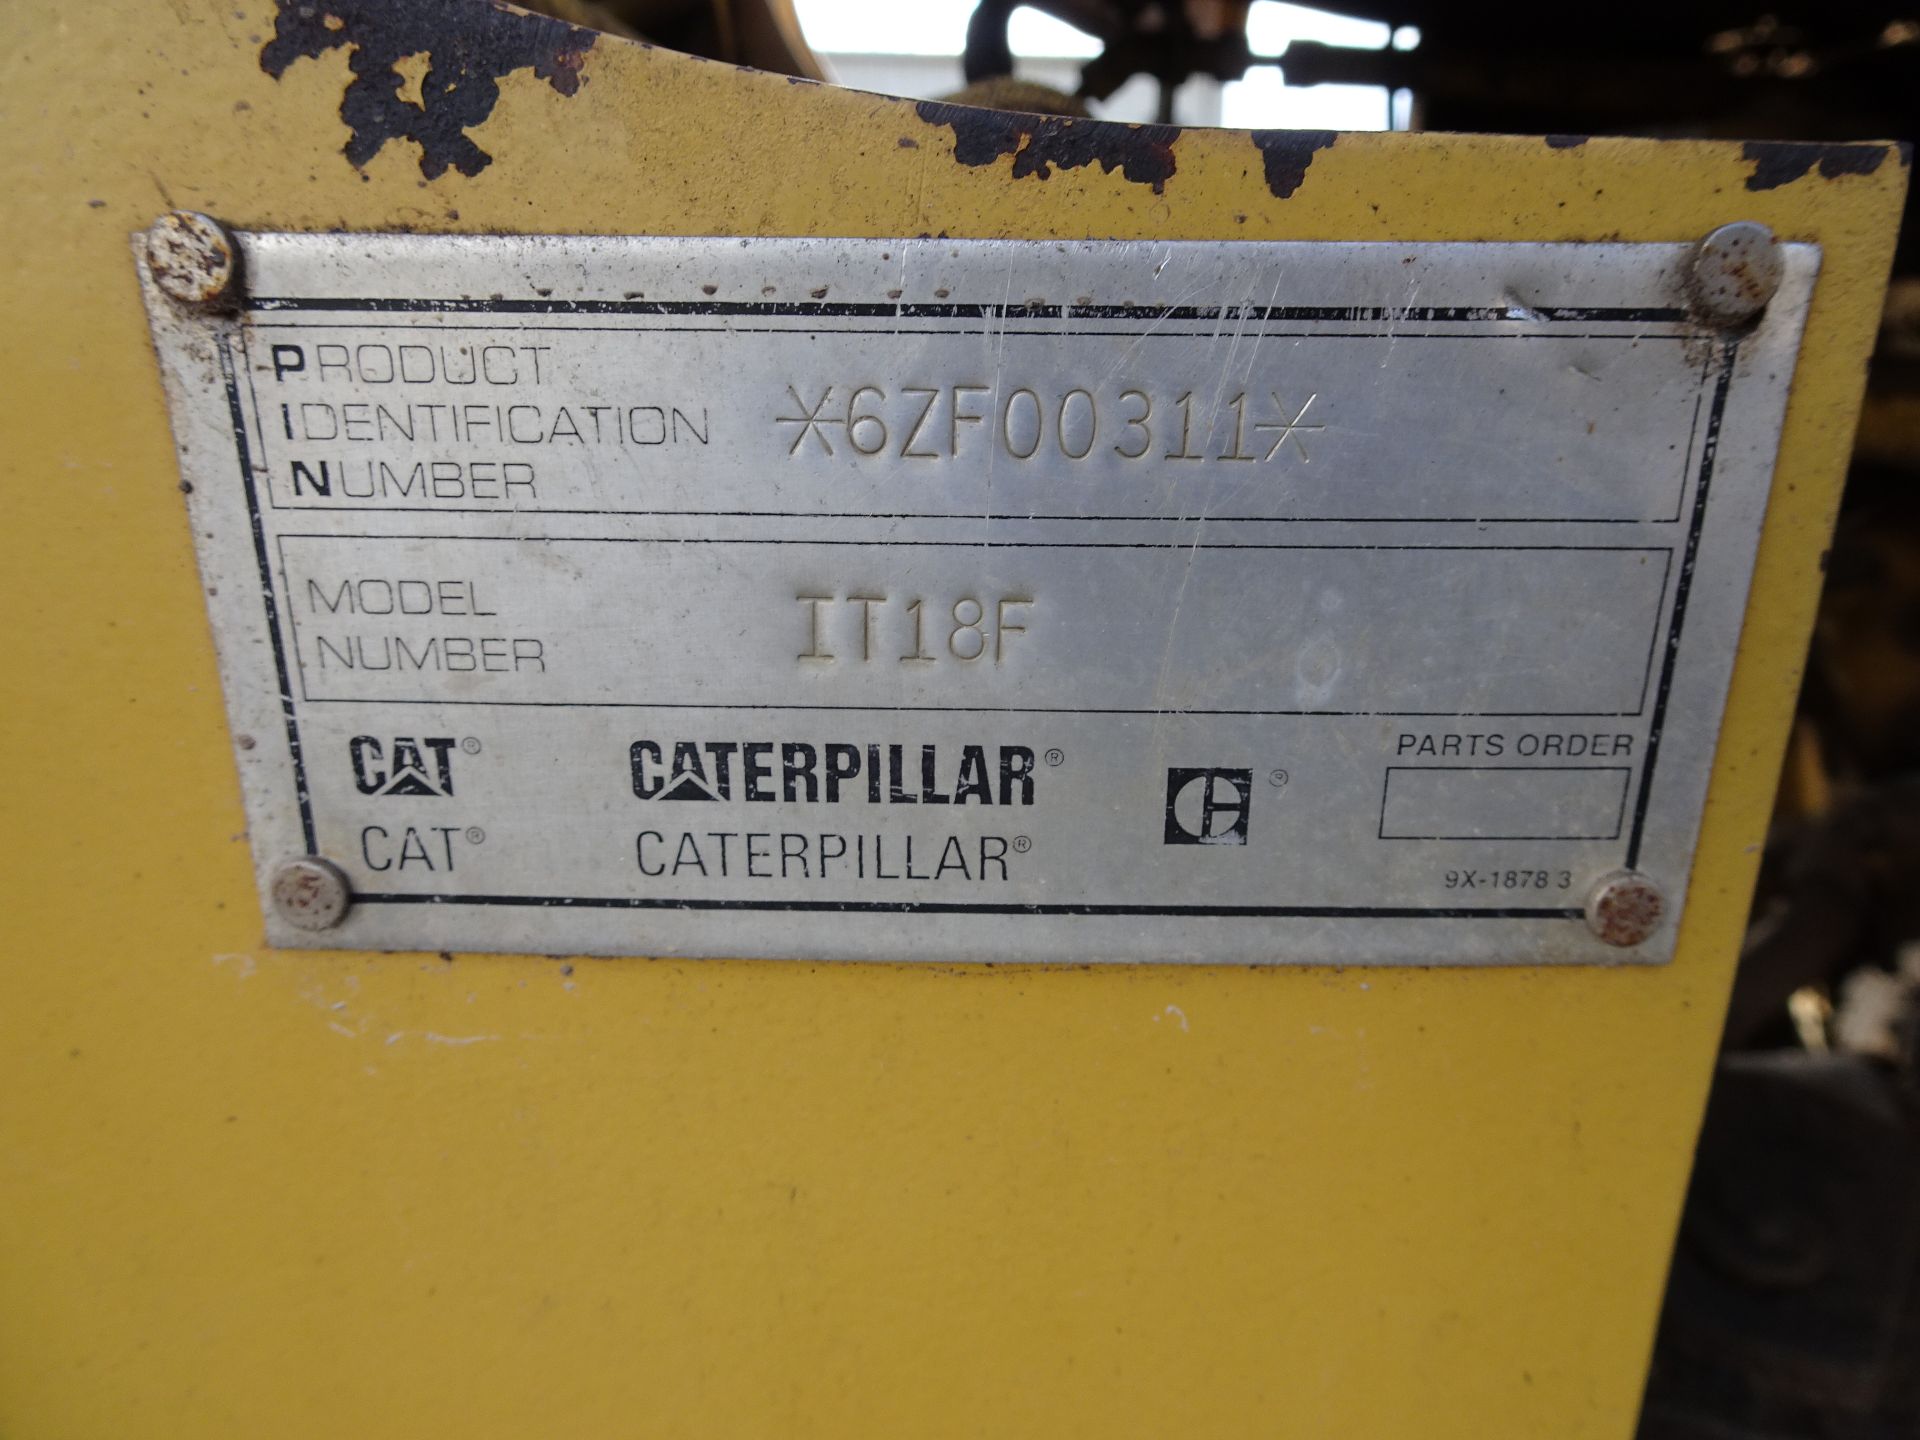 Caterpillar Model IT18F Wheel Loader - Image 6 of 7